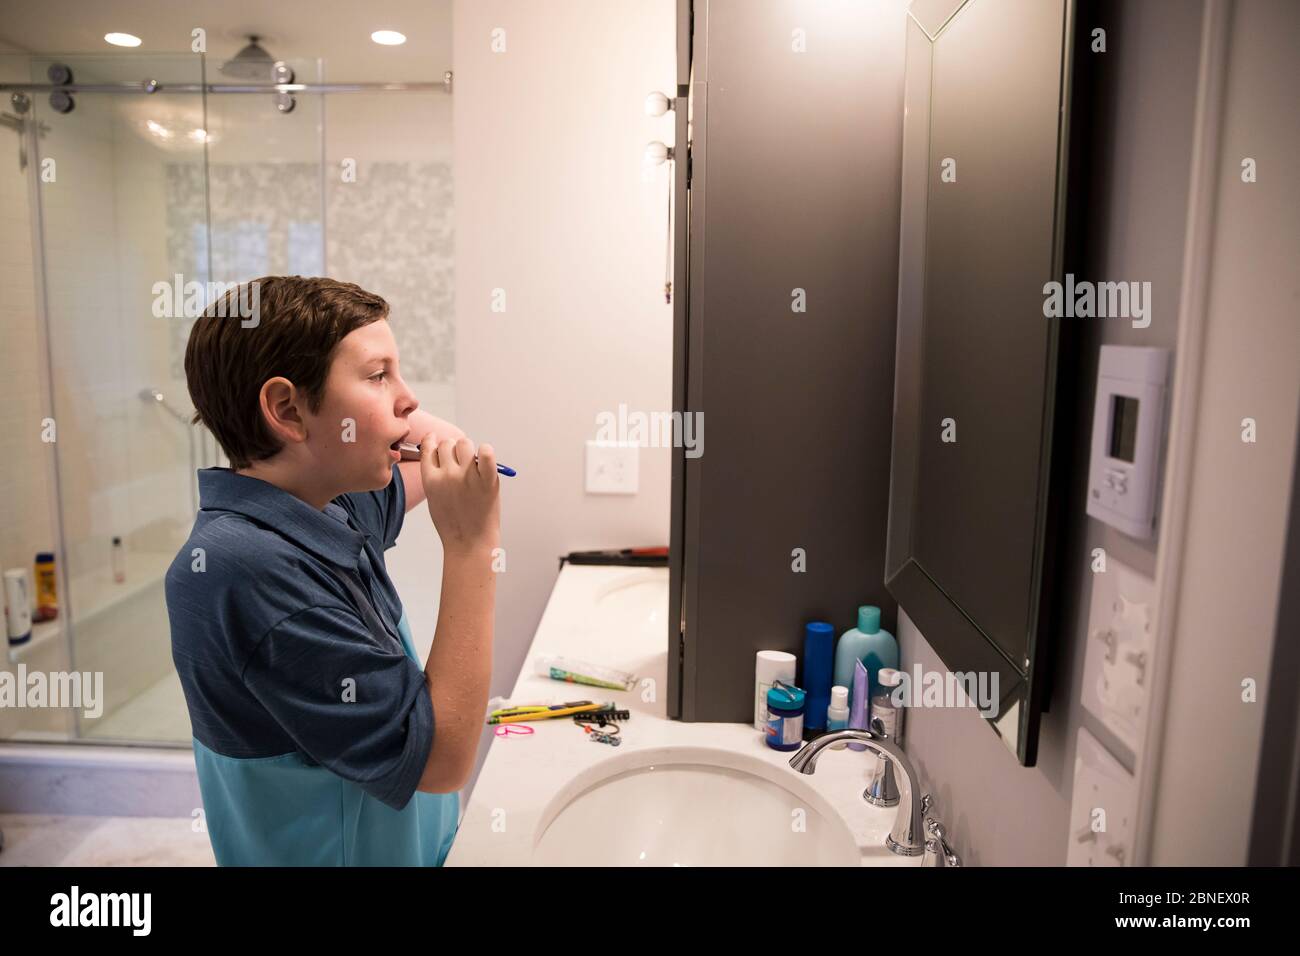 Teen Boy Looks in Mirror While Brushing His Teeth in Modern Bathroom Stock Photo